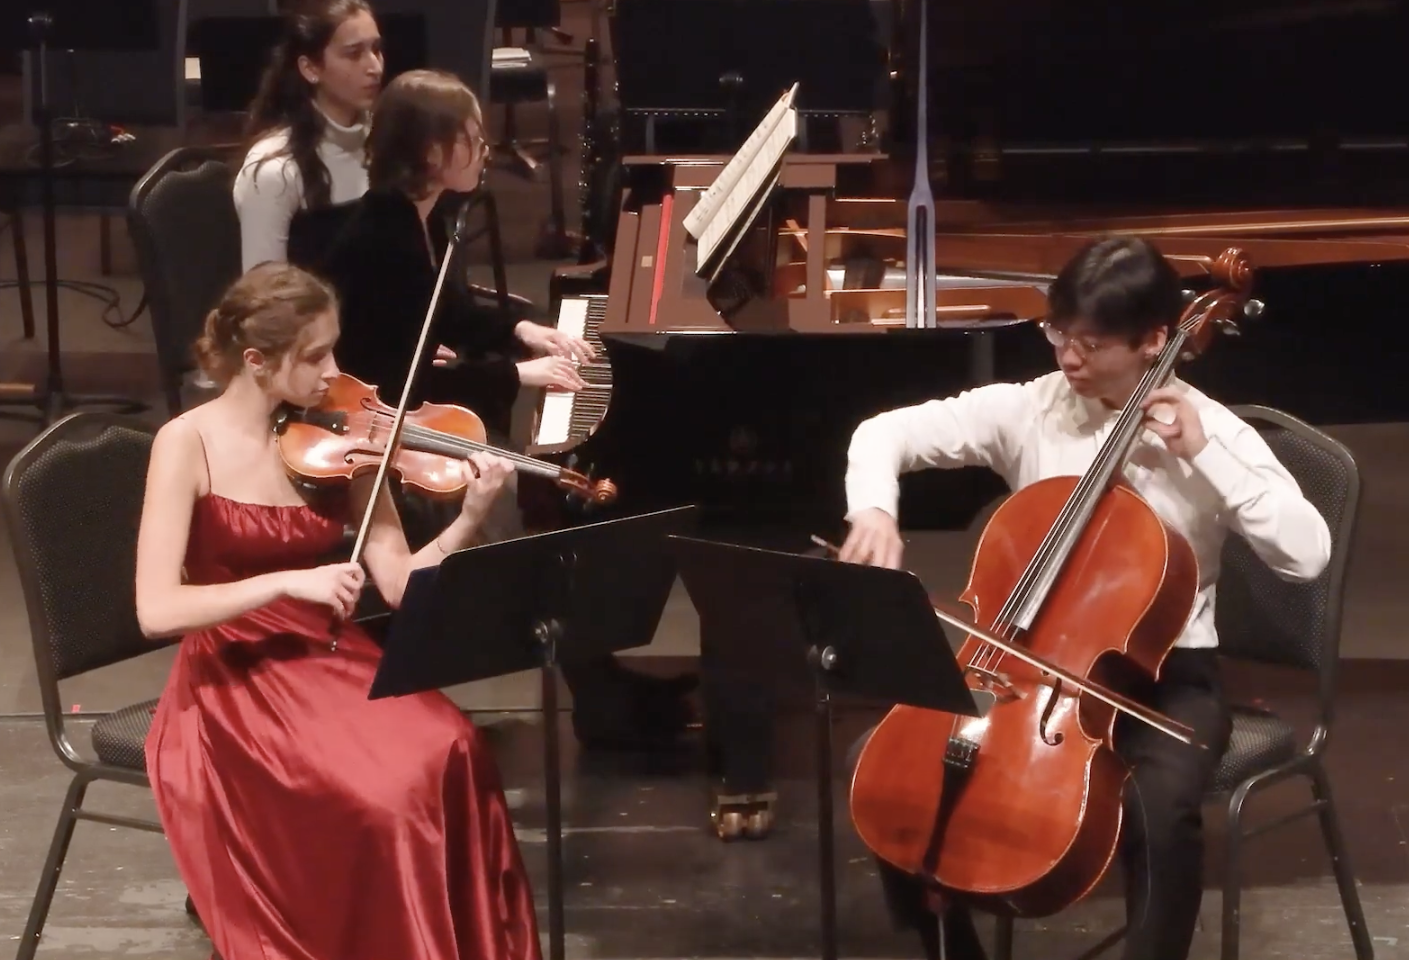 Violinist Frances Norton, Cellist David Kim, and Pianist Monet Jowers in performance